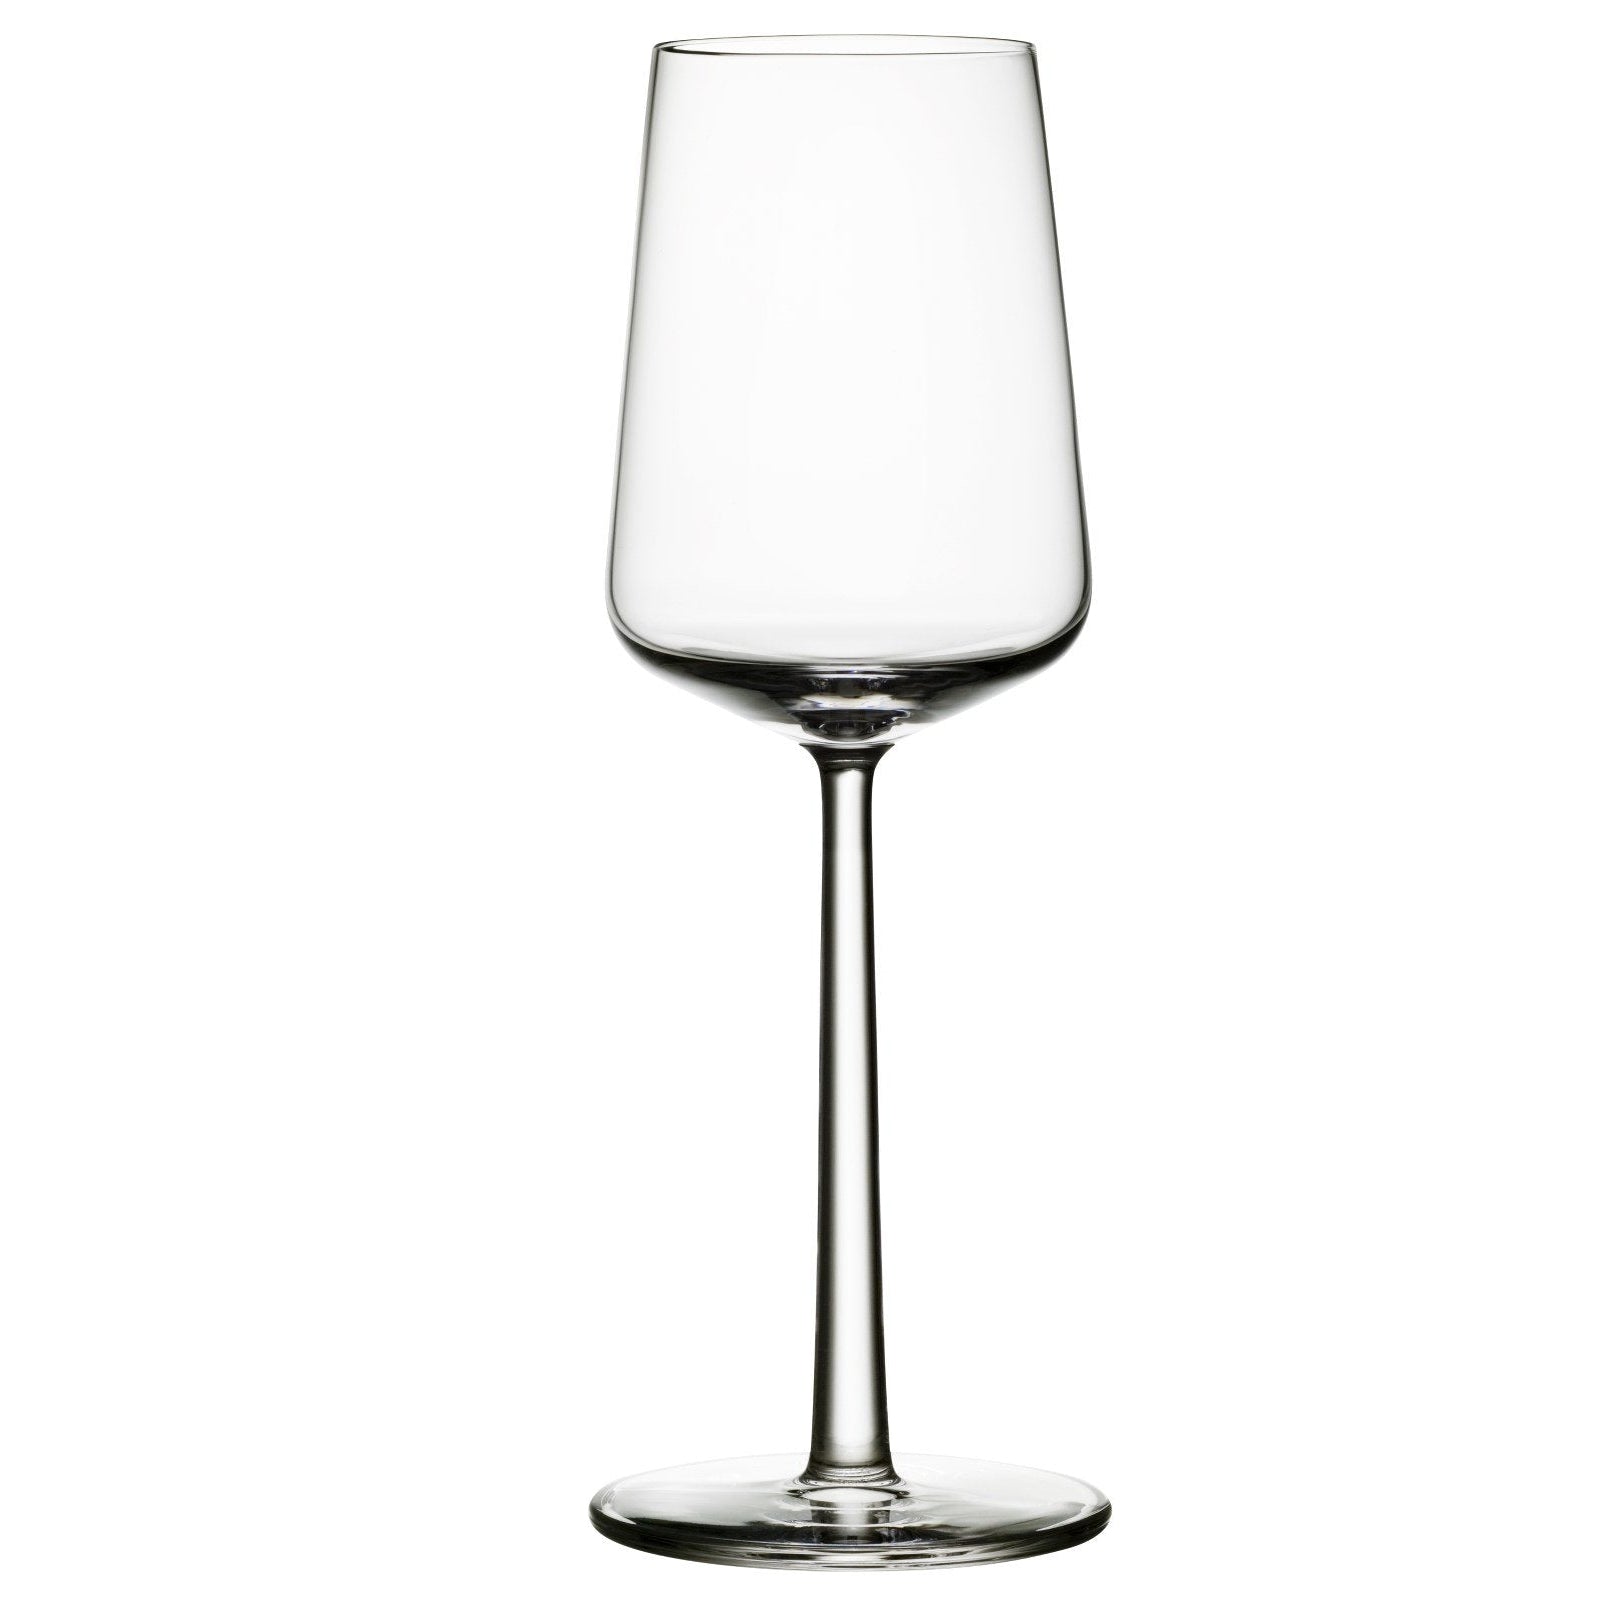 Iittala Essence White Wine Glass 2pcs, 33cl